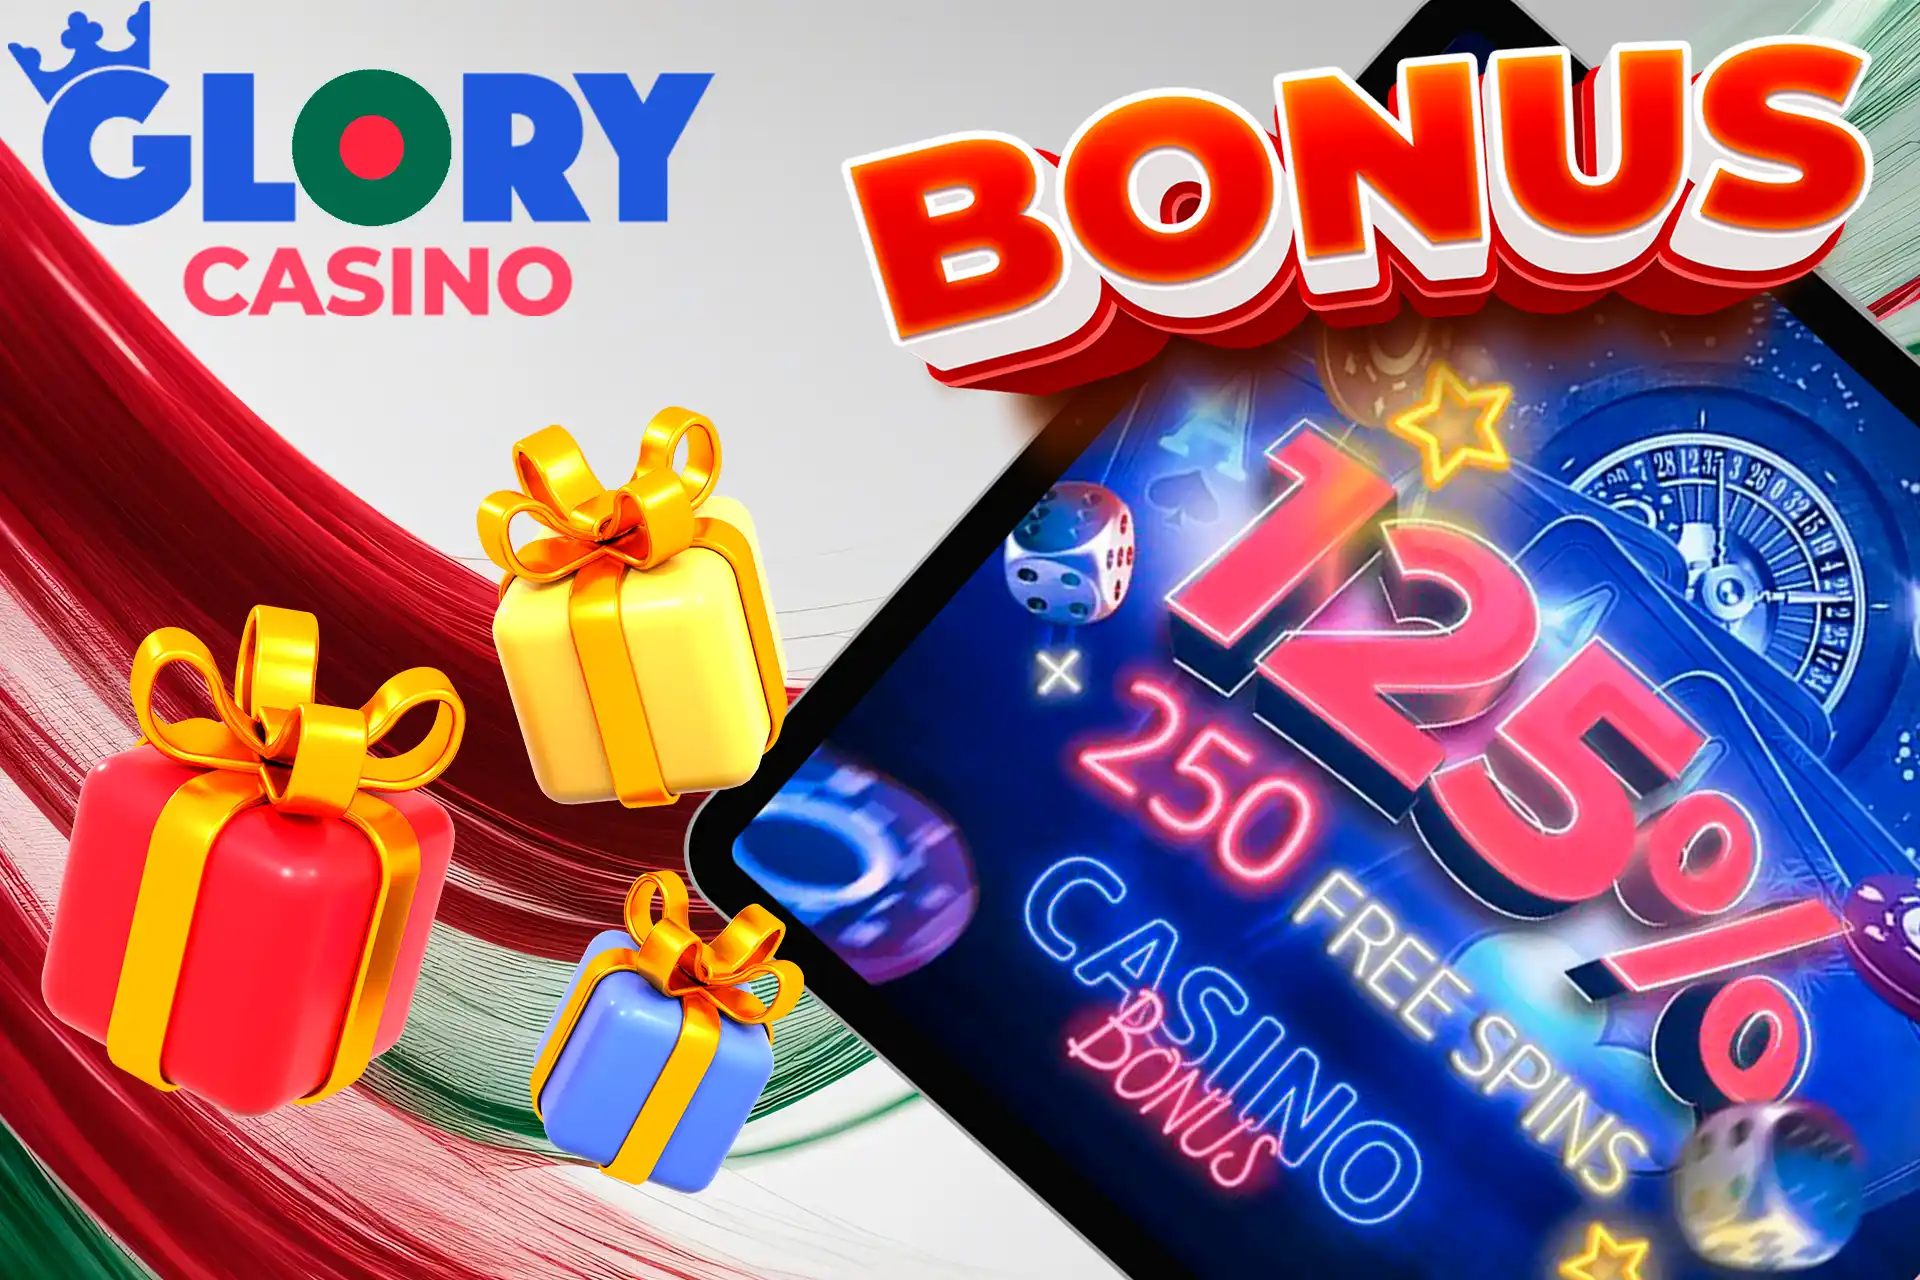 The main welcome bonus at Glory Casino Bangladesh is waiting for you